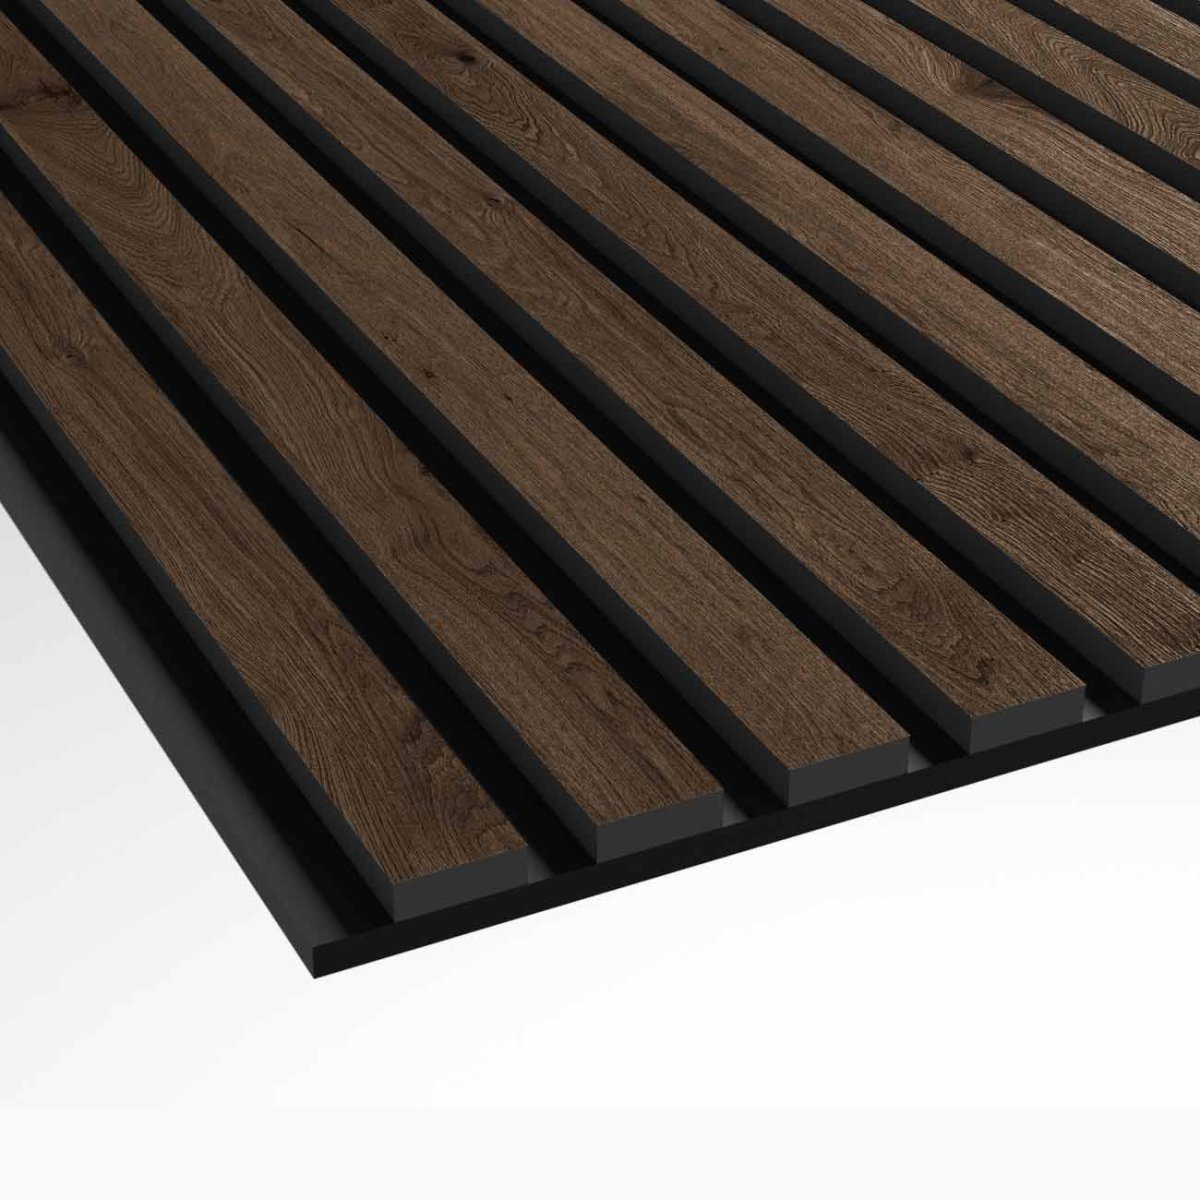 Smoked Oak Acoustic Slats Wall Panel 240 x 60